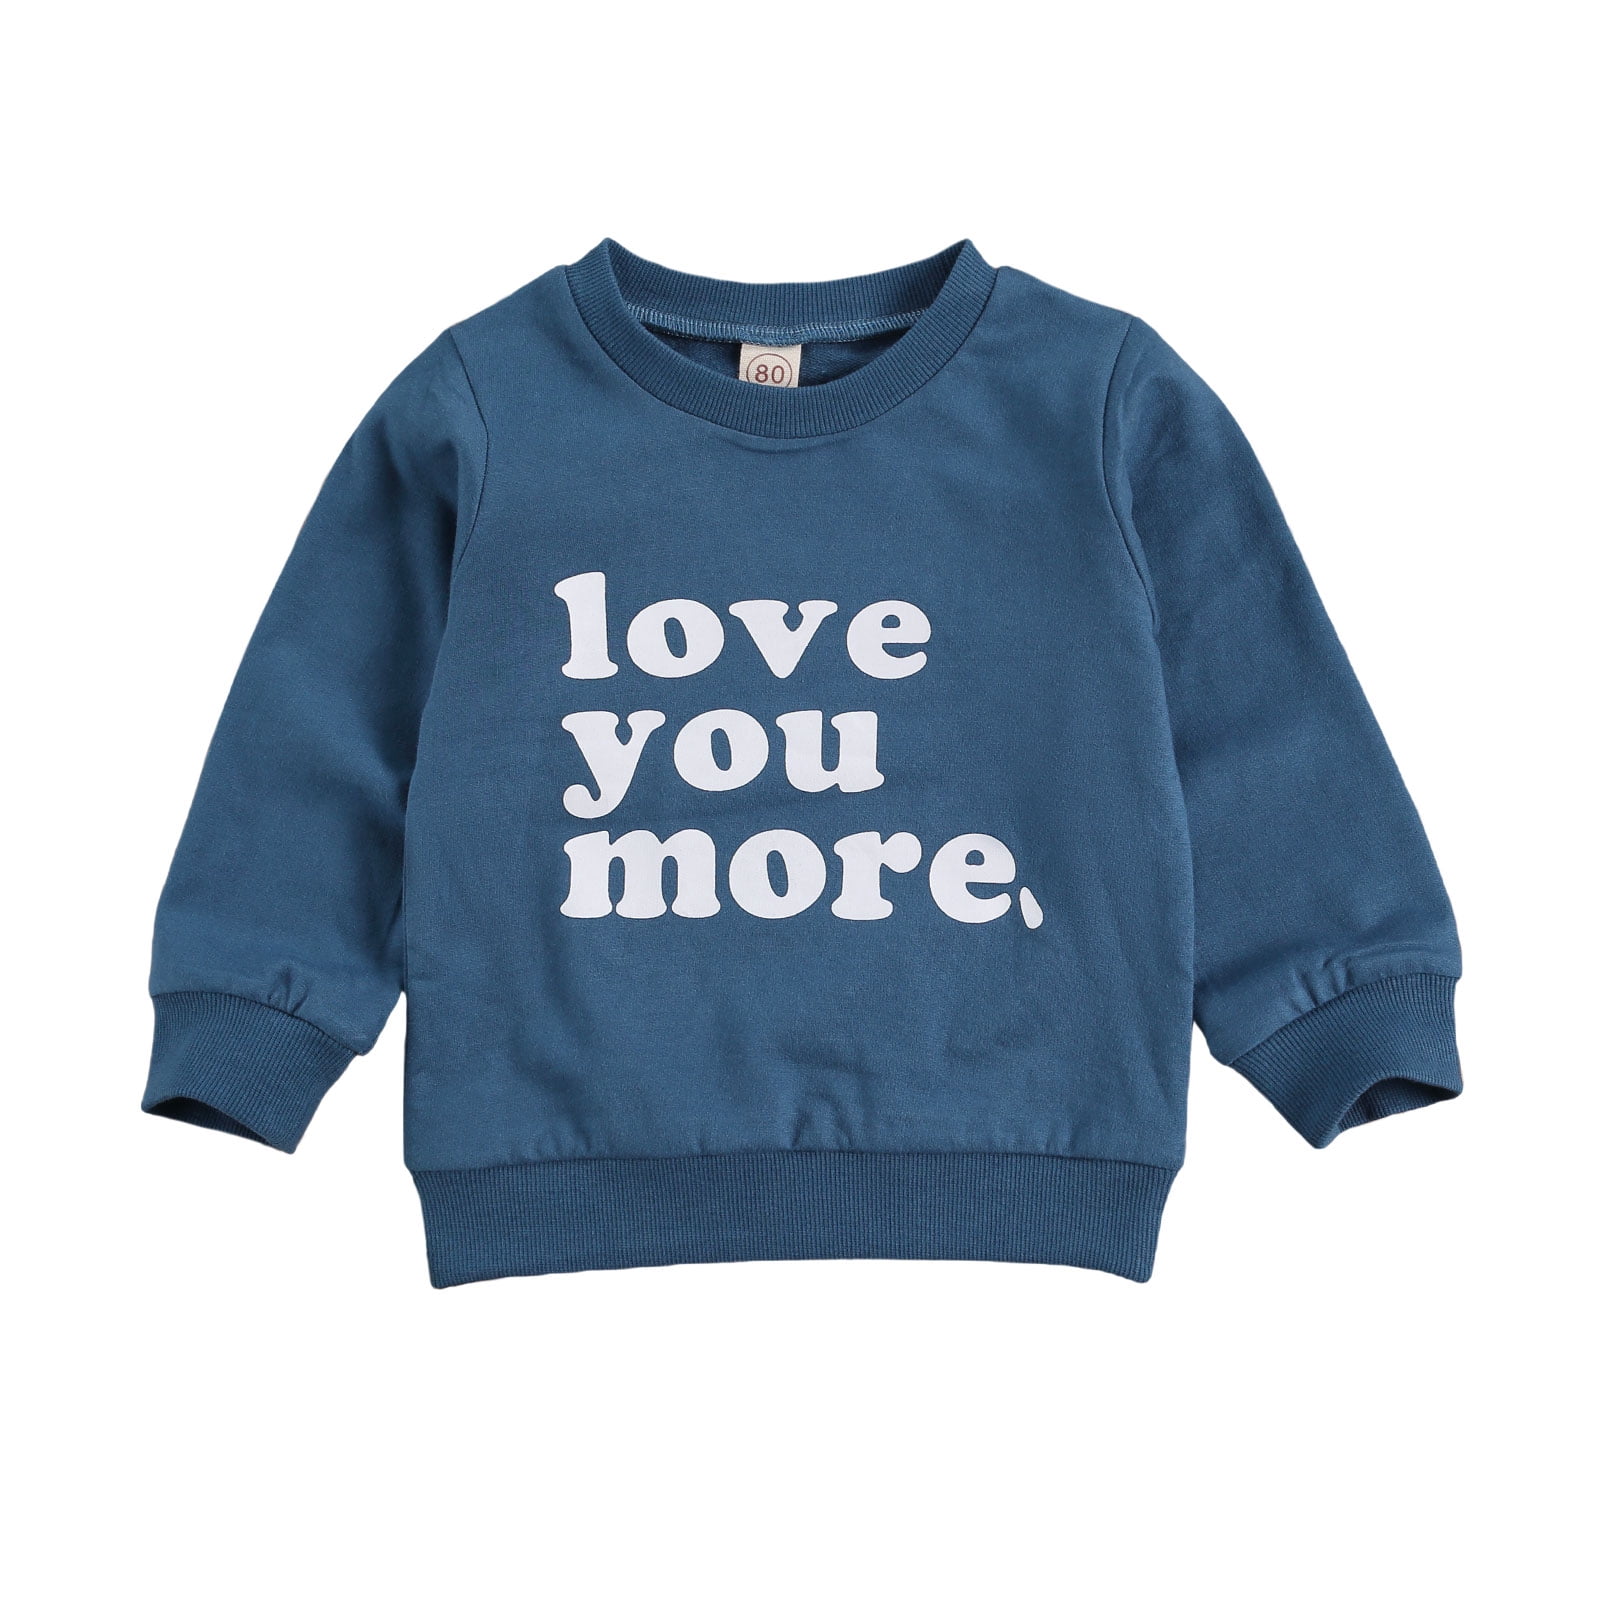 Toddler Baby Girls Boys Hoodie Sweatshirt Kids Long Sleeve Letter Print Hooded Sweater Jacket Tops Sport Fall Winter Clothes